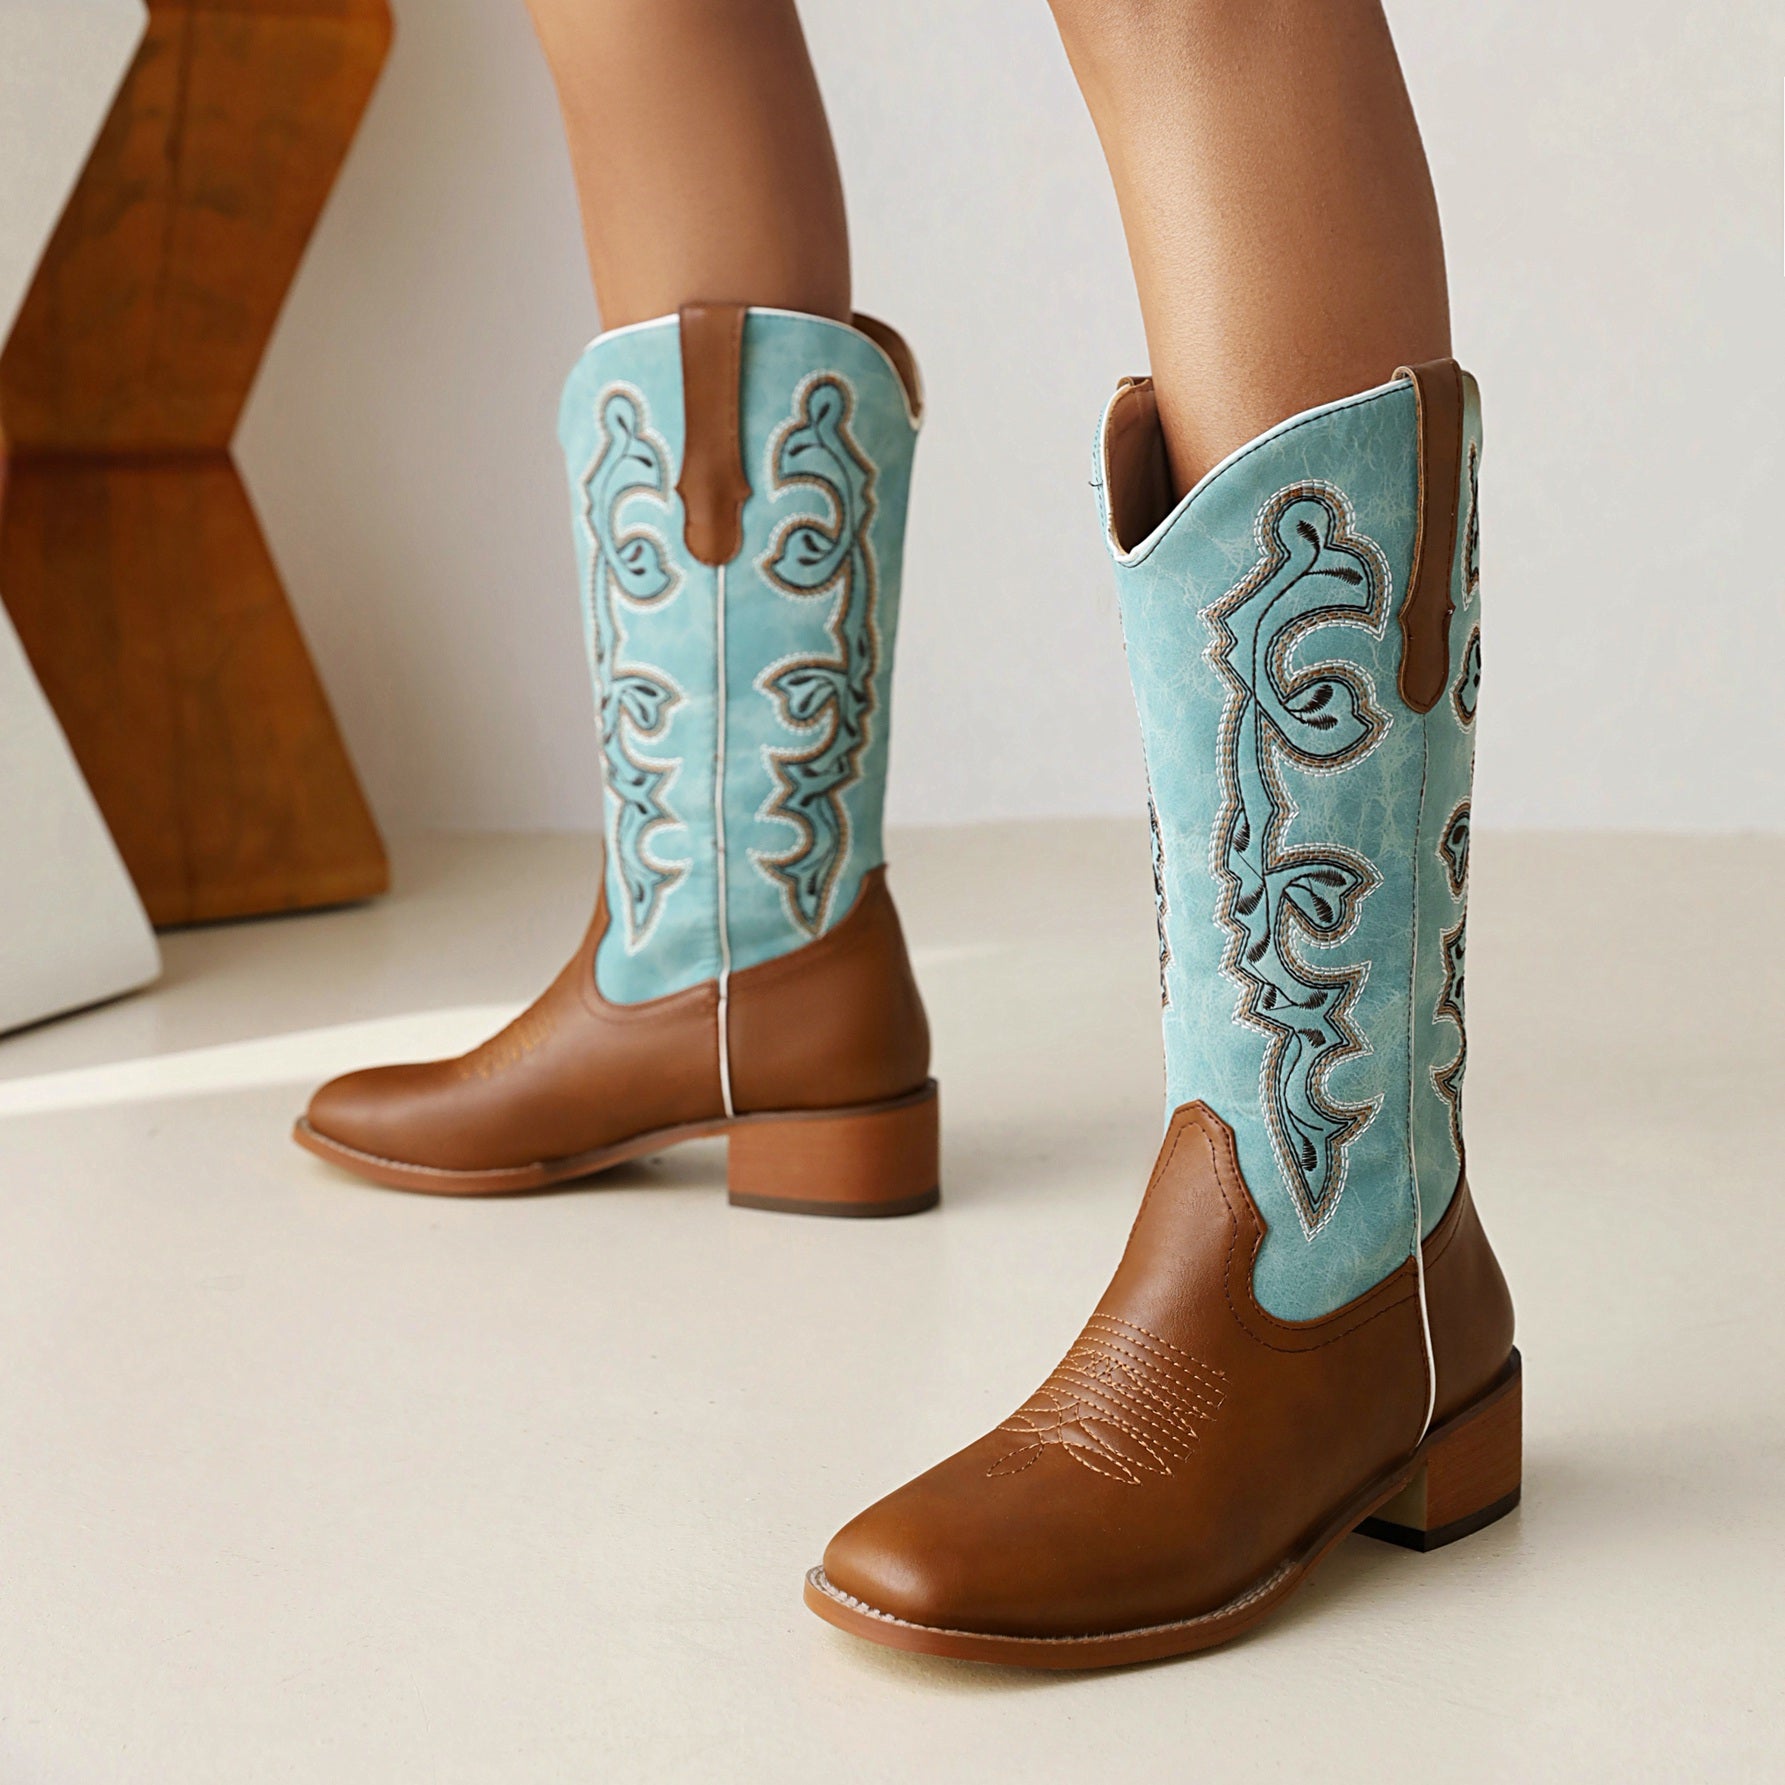 Bigsizeheels Western vintage blue embroidered boots - Blue freeshipping - bigsizeheel®-size5-size15 -All Plus Sizes Available!